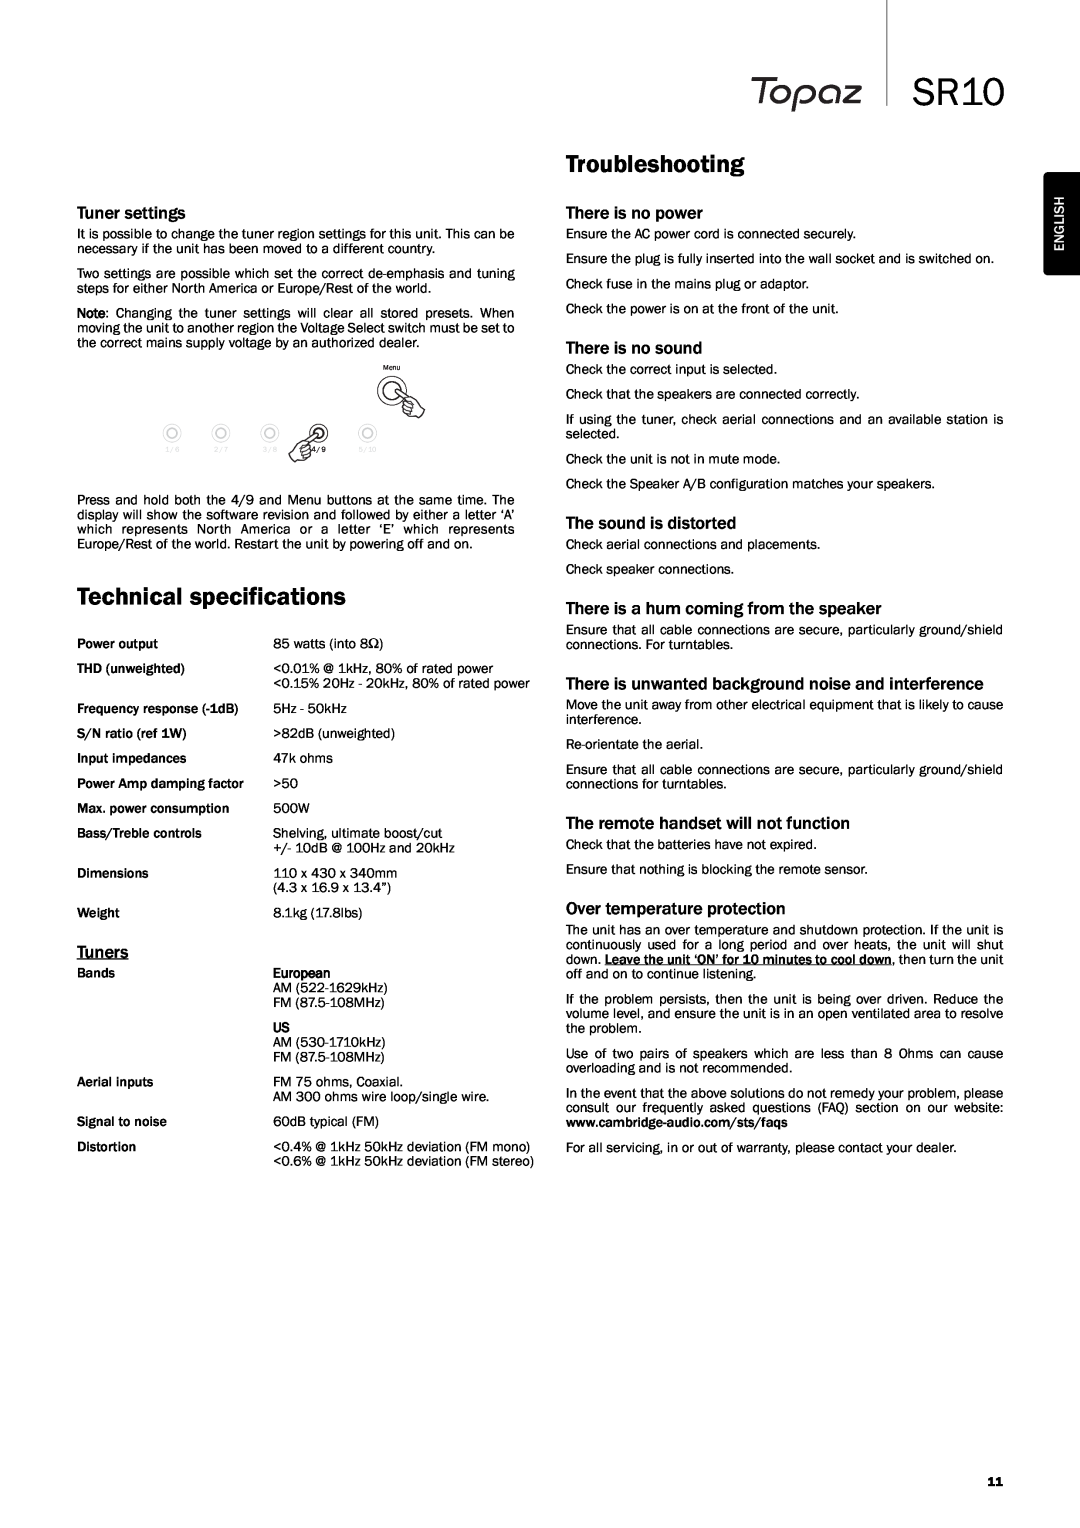 Cambridge Audio SR10 user manual Technical specifications, Troubleshooting, English, European 